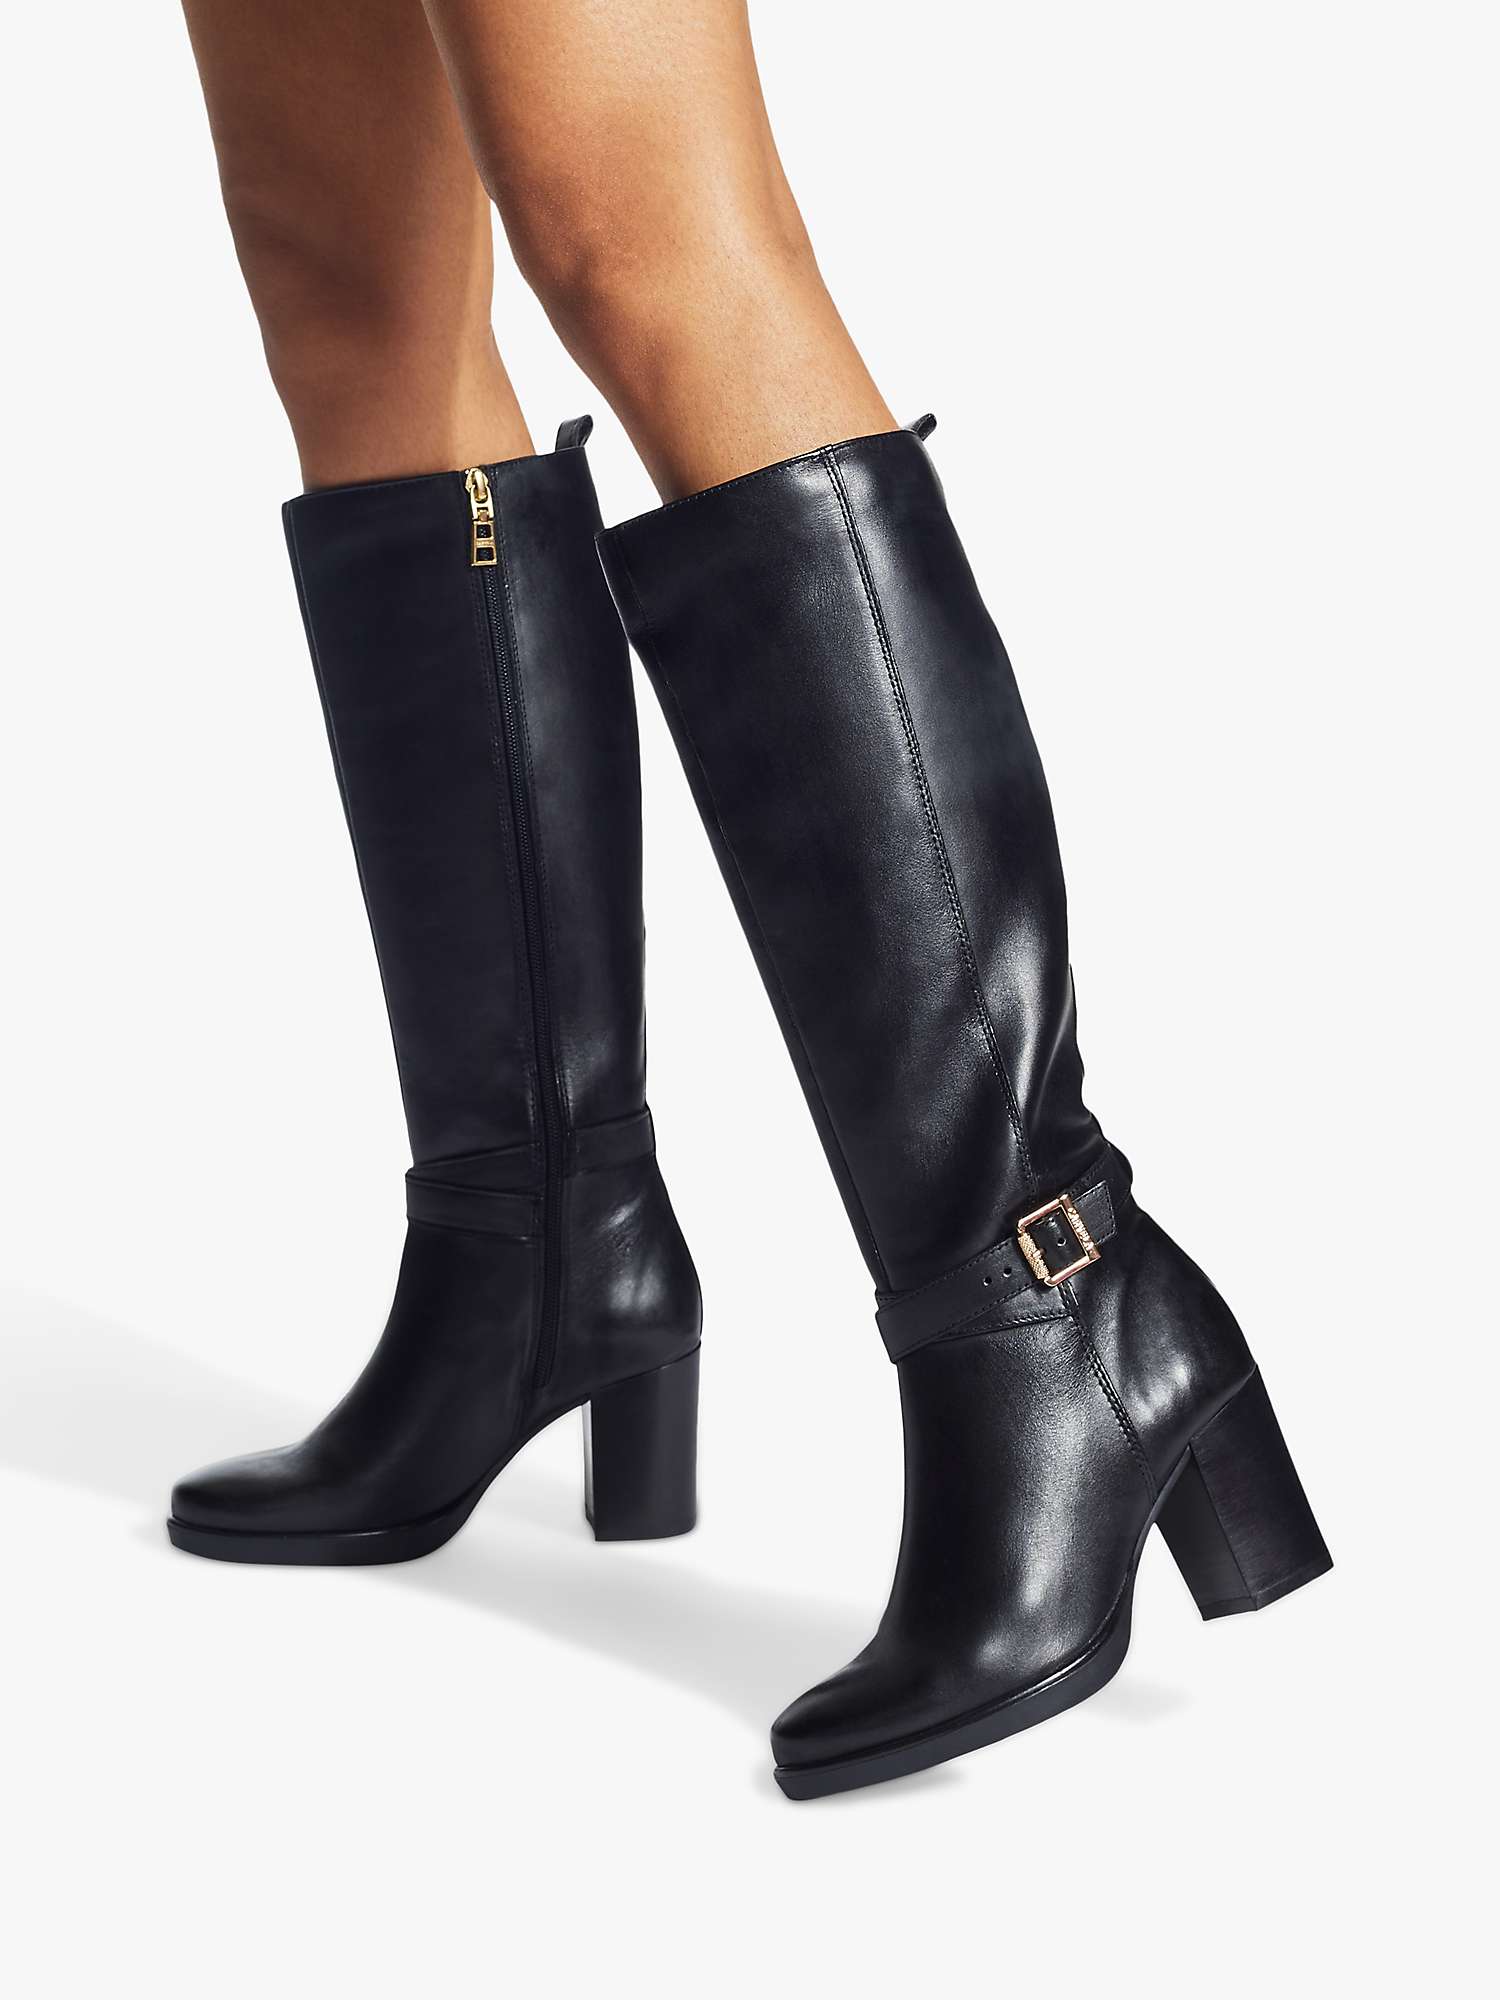 Buy Carvela Silver Leather Knee High Boots, Black Online at johnlewis.com